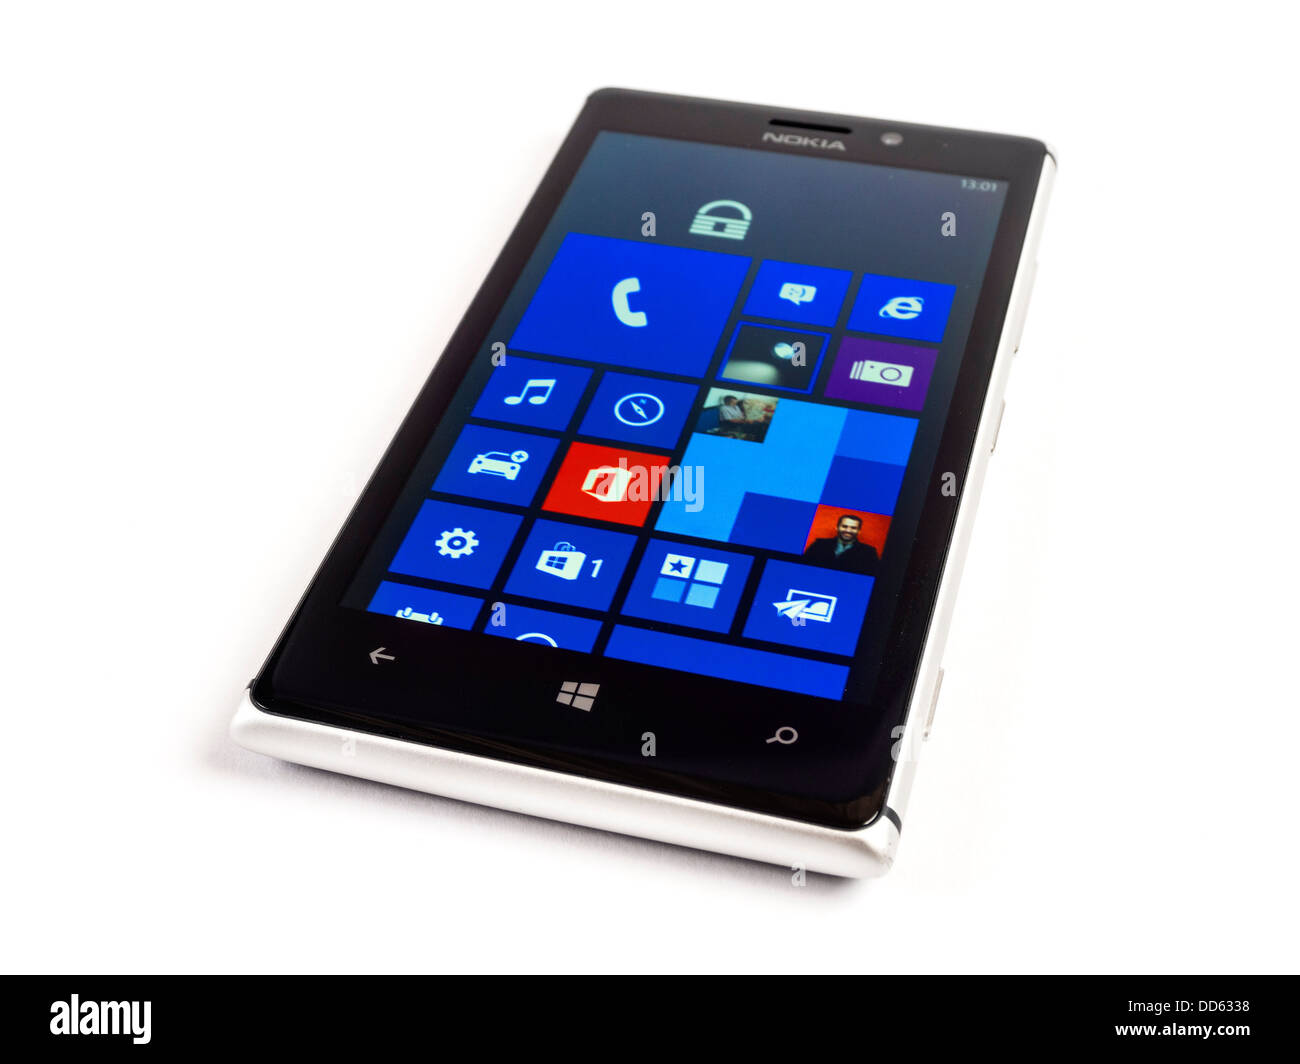 Nokia Lumia 925 Windows Phone 8 smartphone cut out isolated on white background Stock Photo